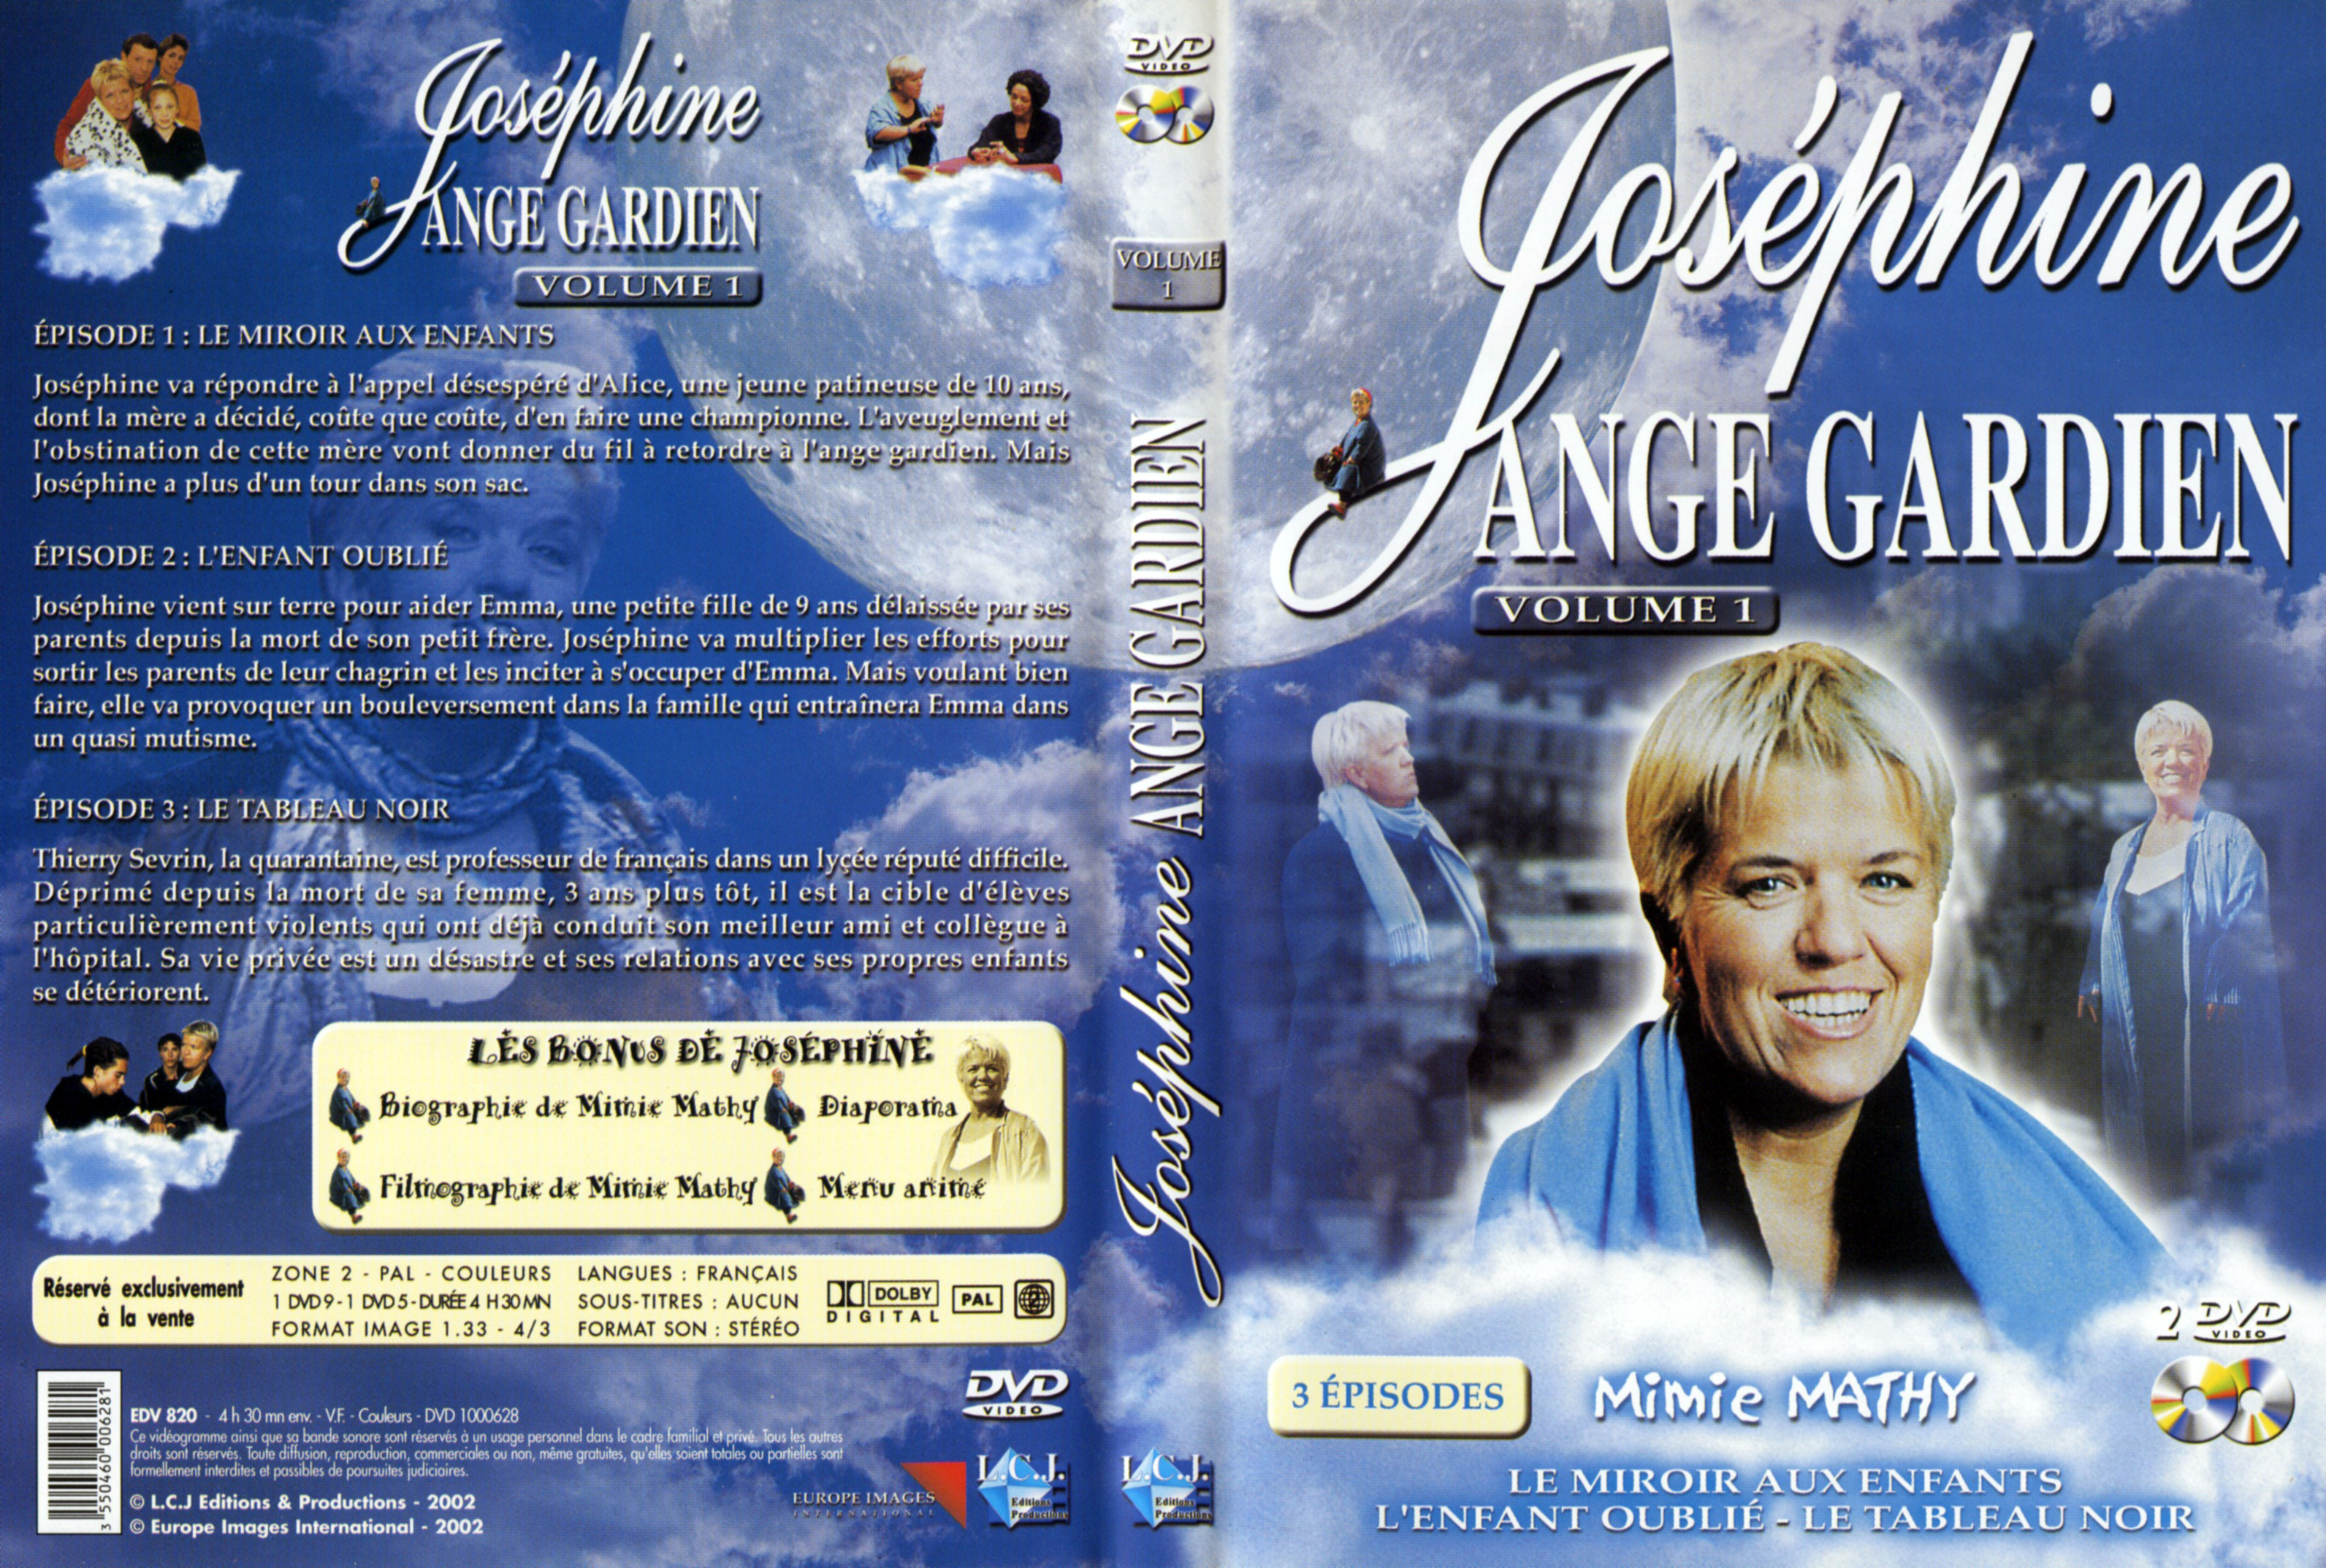 Jaquette DVD Josephine ange gardien vol 01 v3